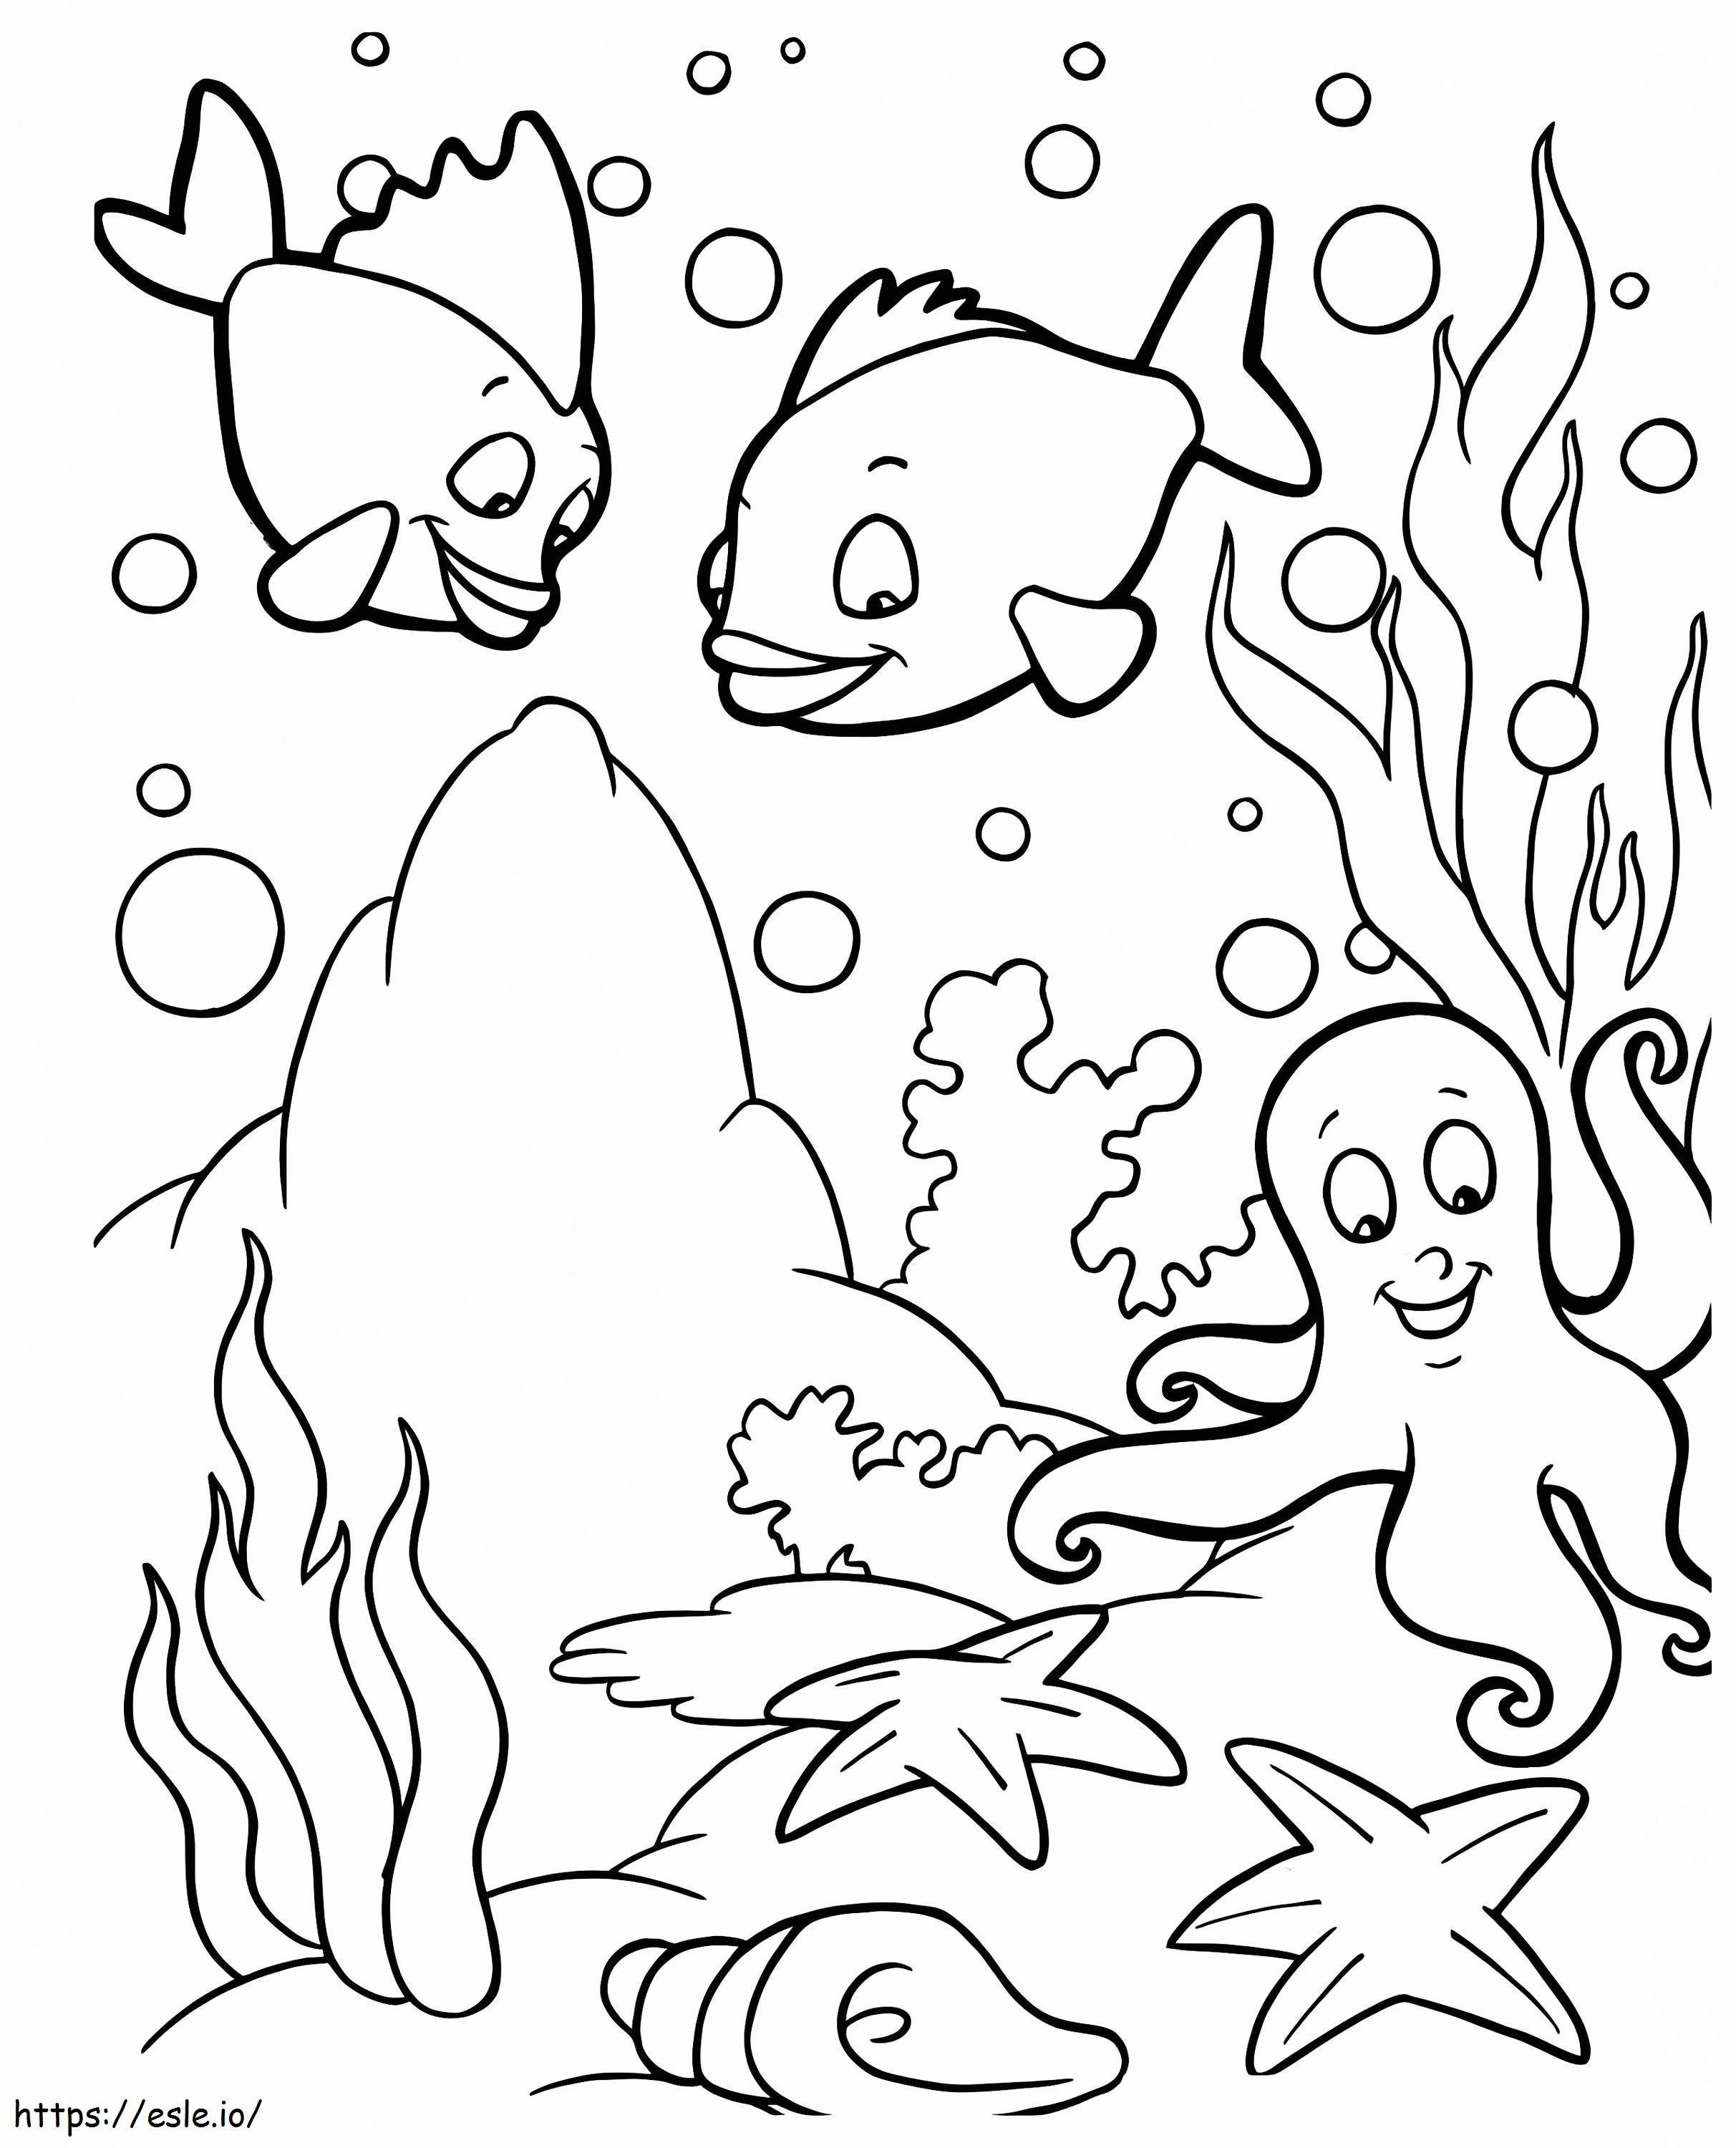 Printable Ocean Scene coloring page